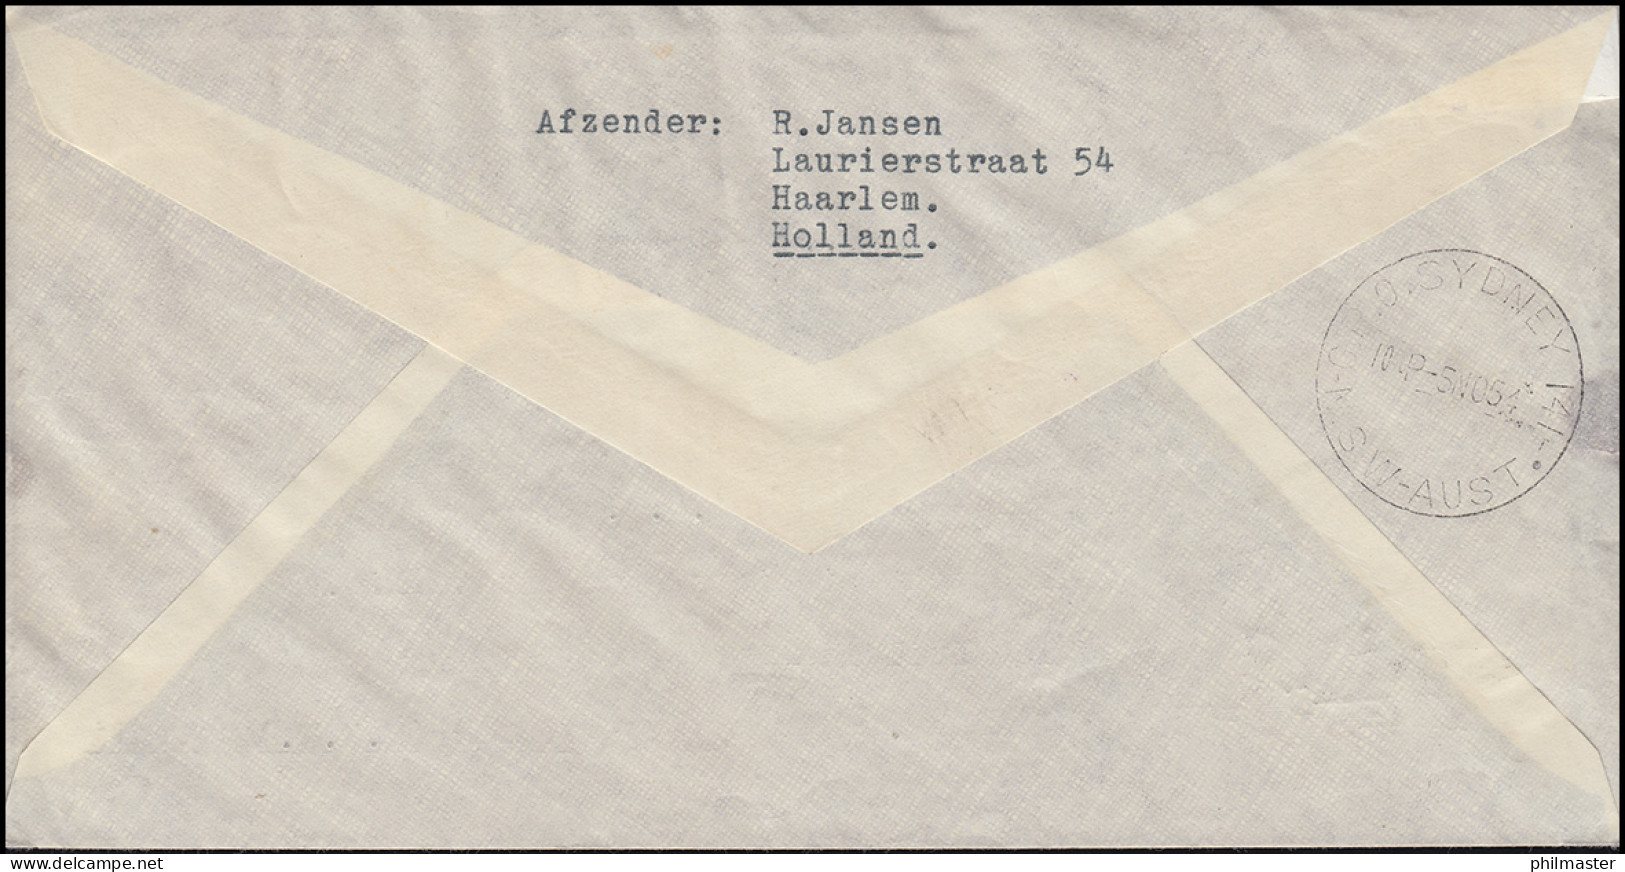 1. KLM-Sonderflug POSTILLION D'AMOUR Amsterdam-Sydney 31.10.1954 Brief 26.10.54 - Luftpost